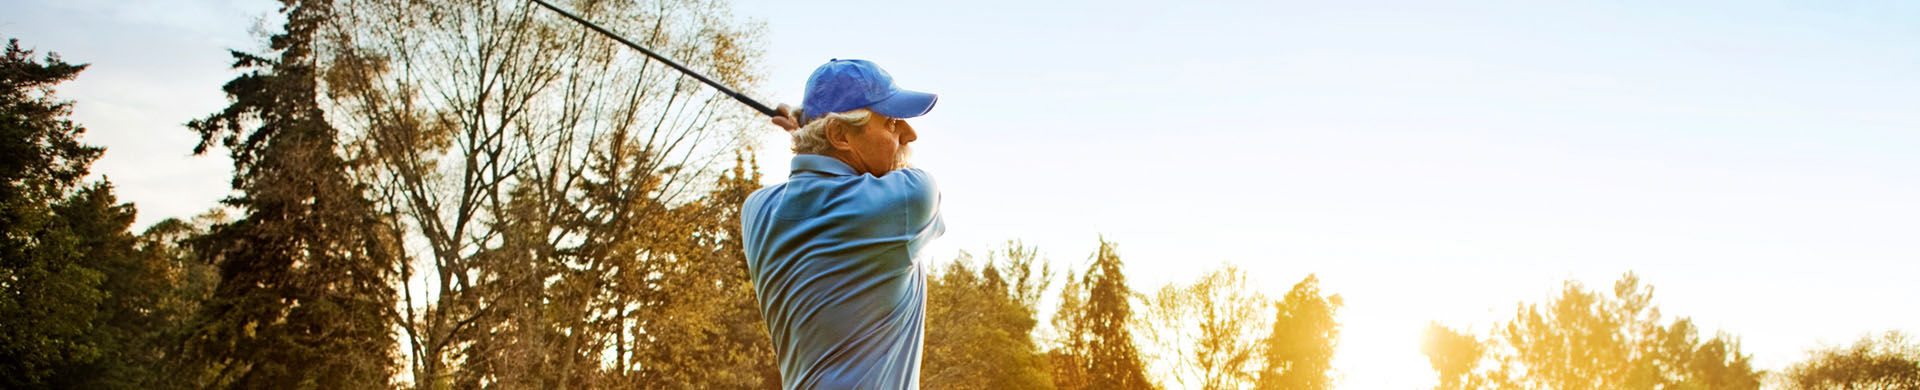 A senior man mid golf swing 